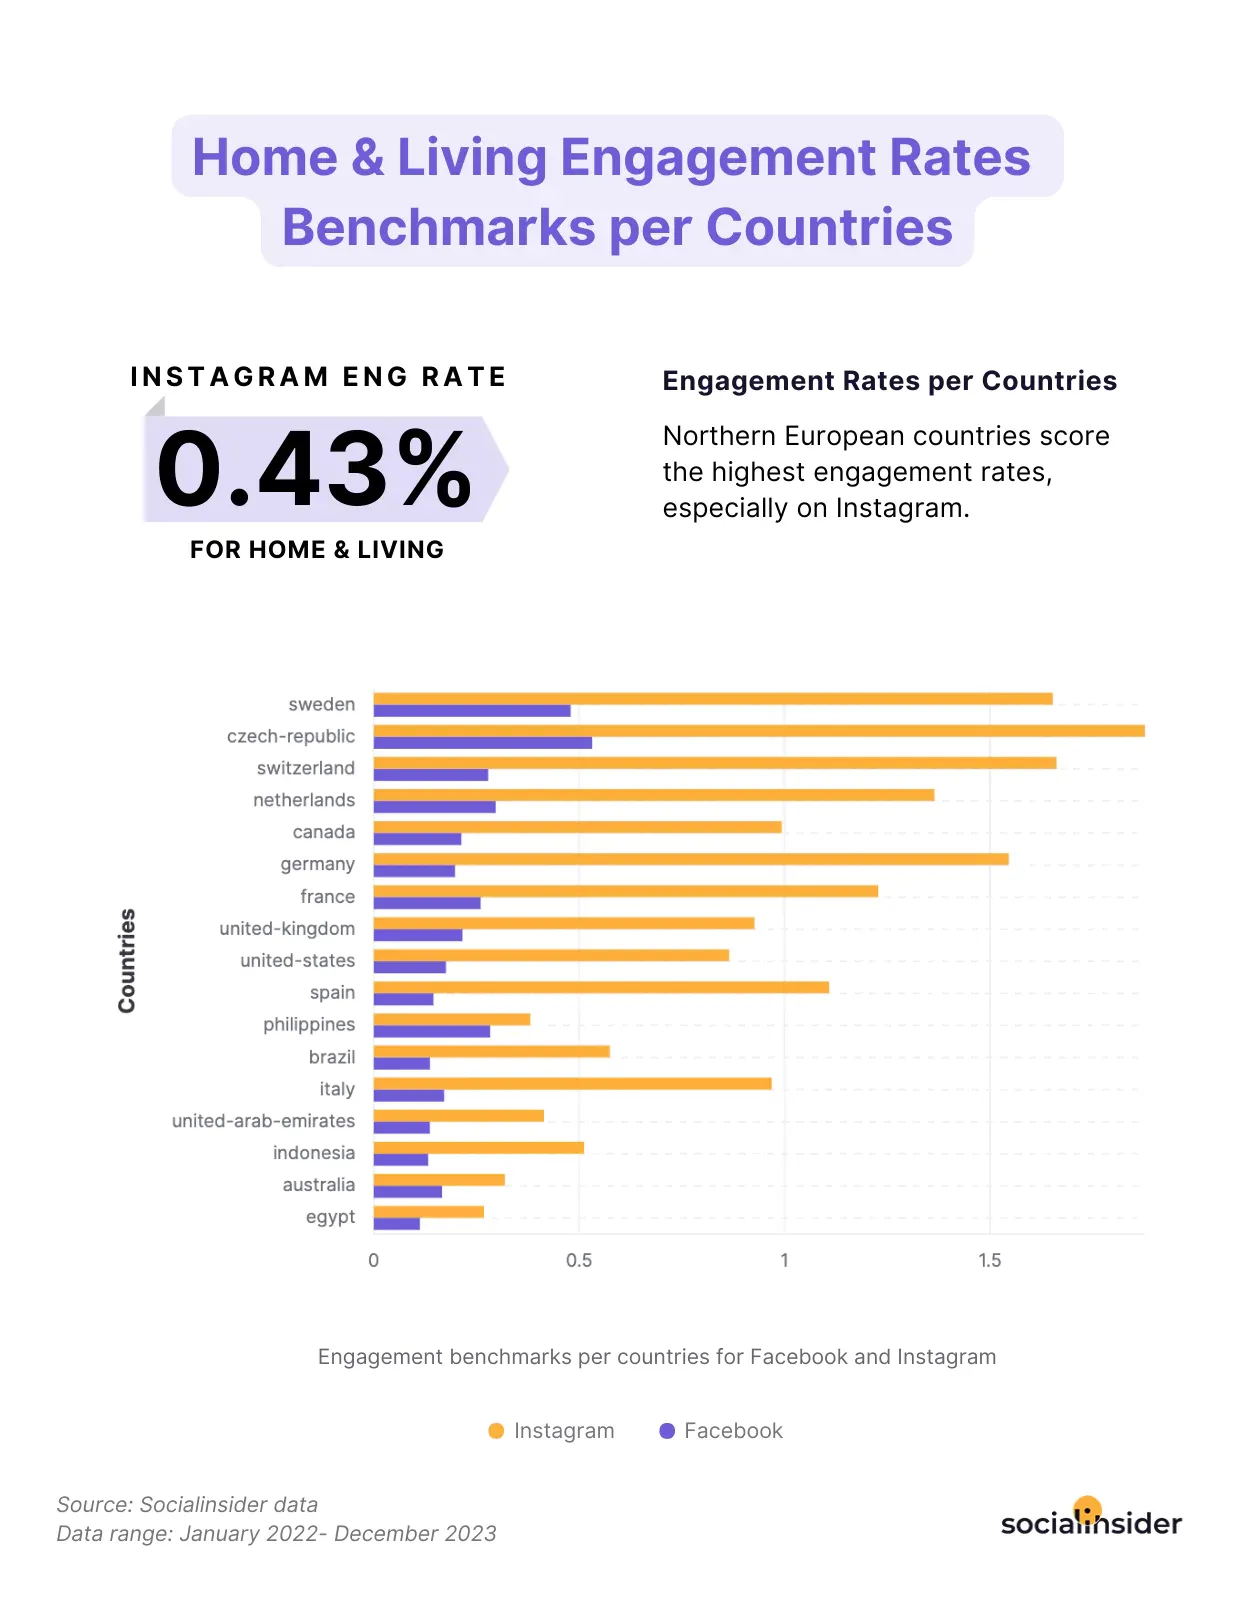 home & living regional engagement benchmarks